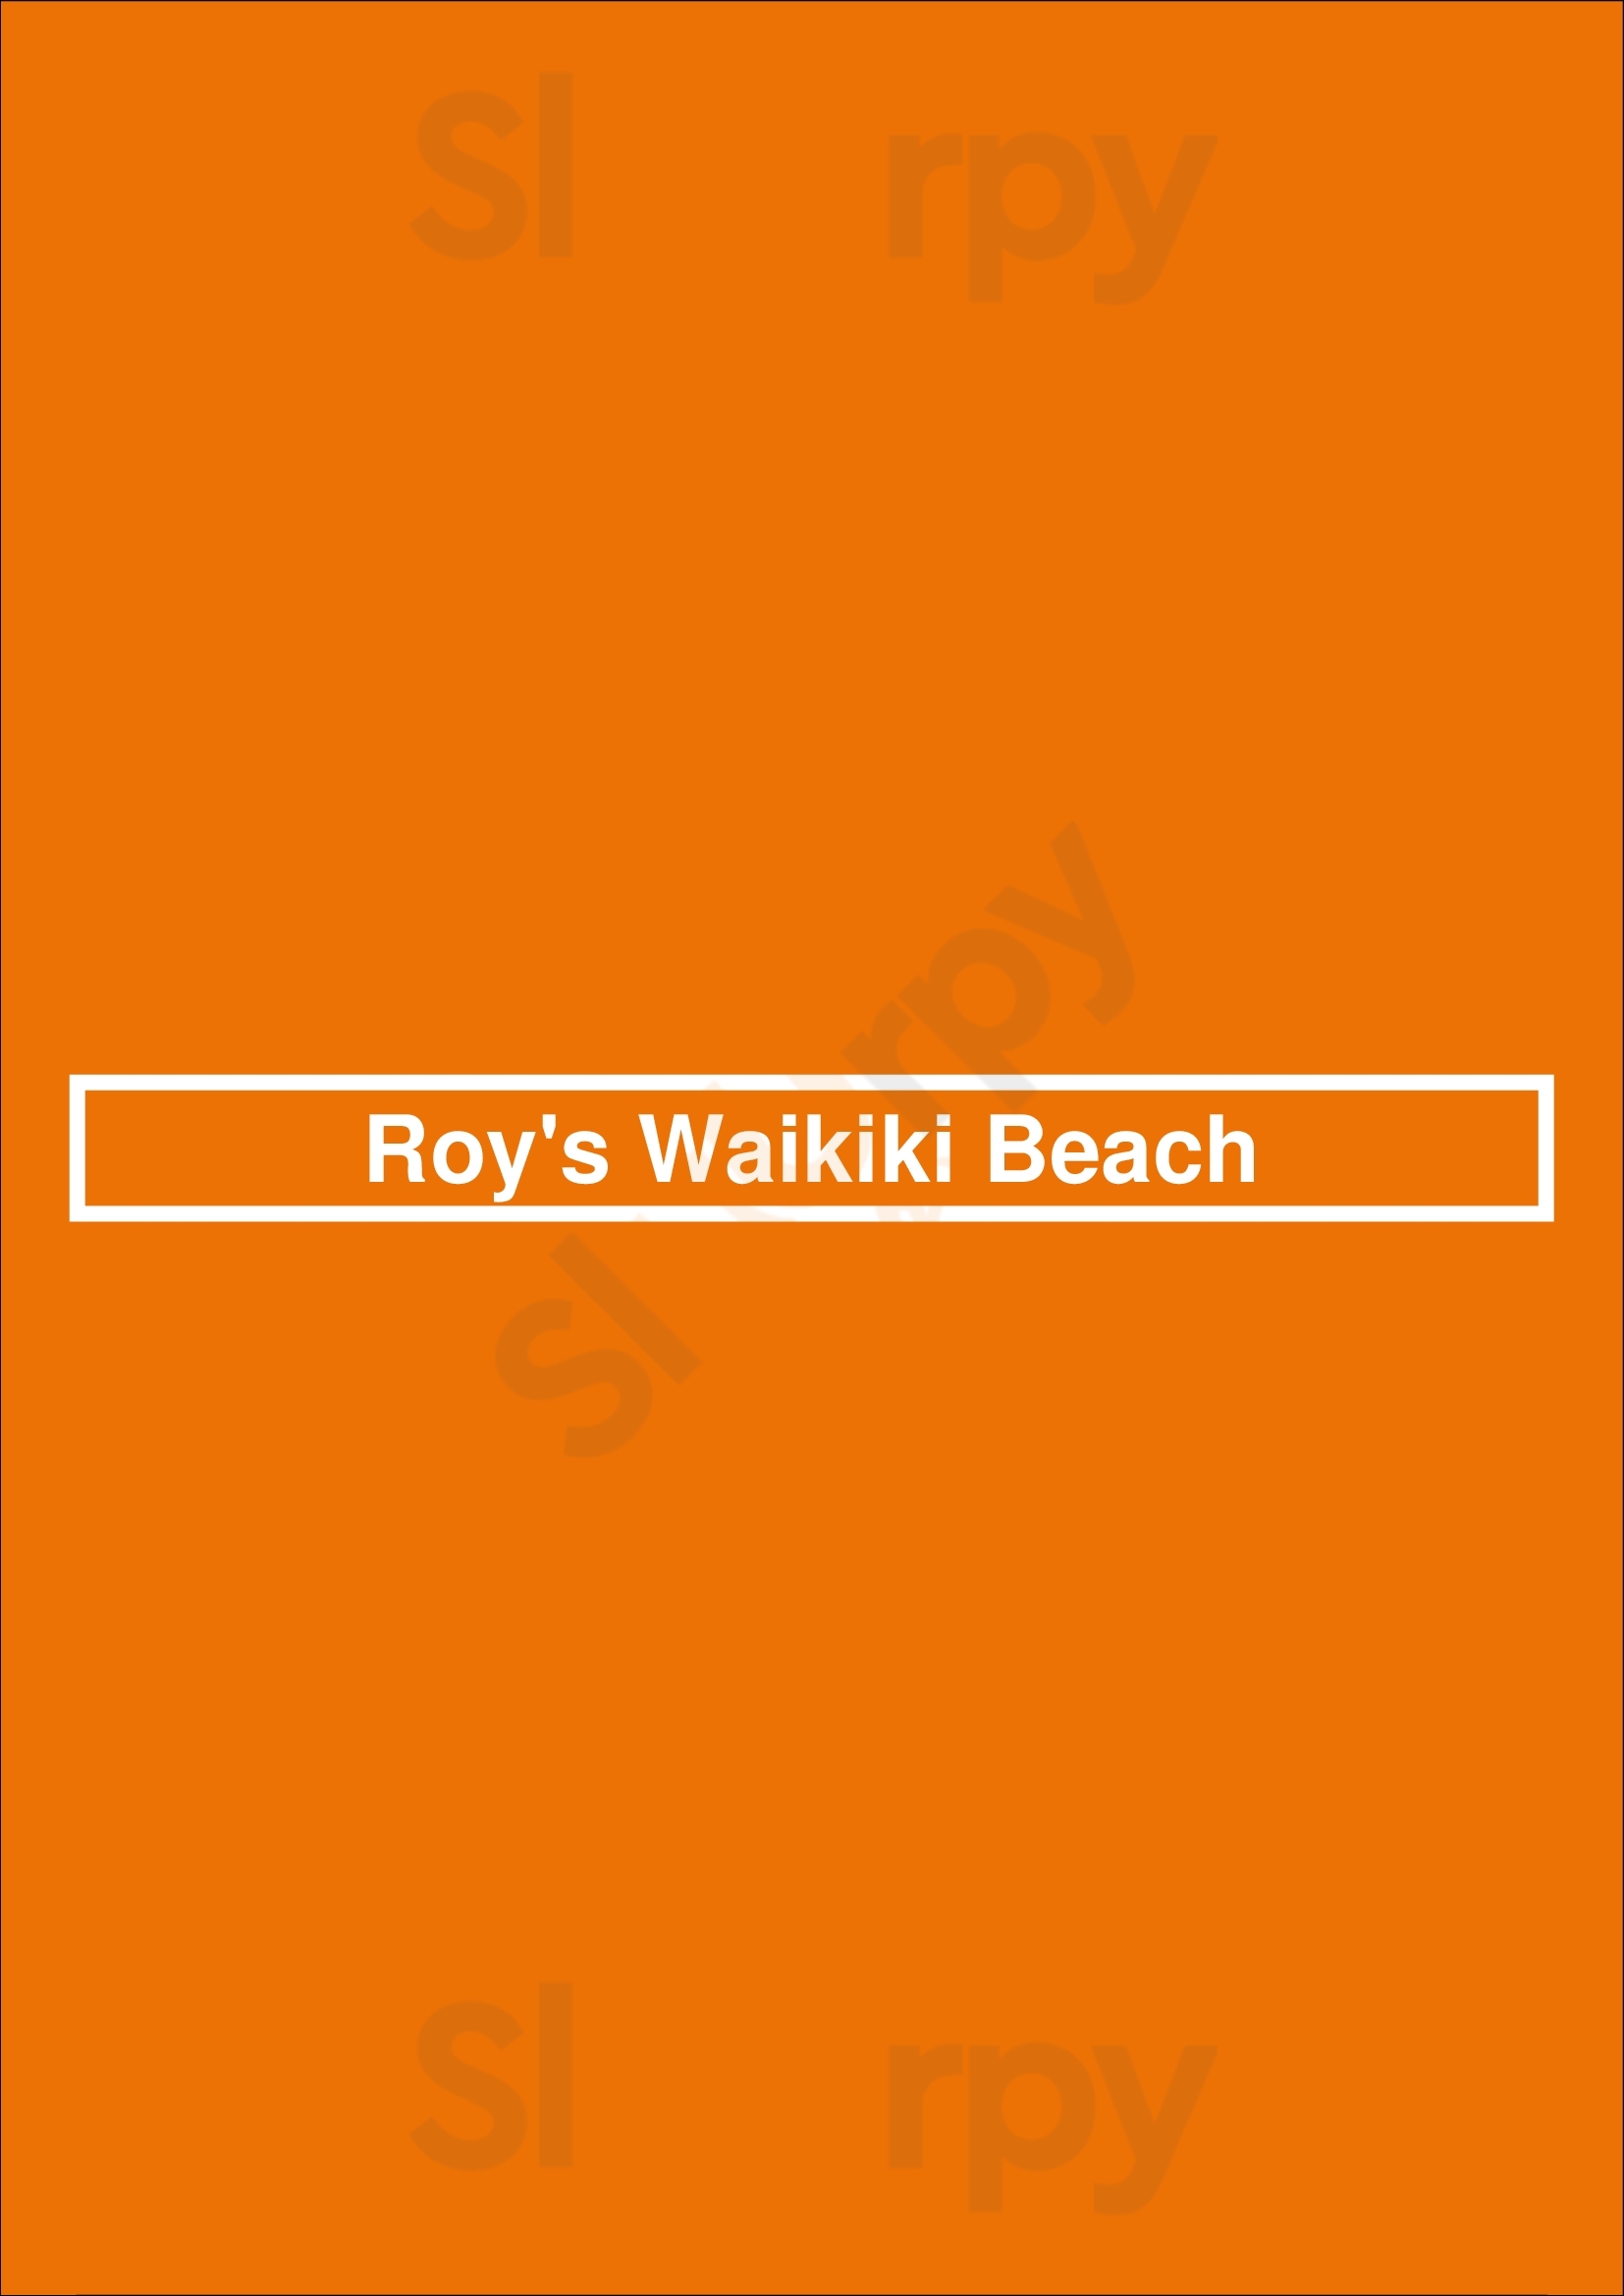 Roy's Waikiki Beach Honolulu Menu - 1